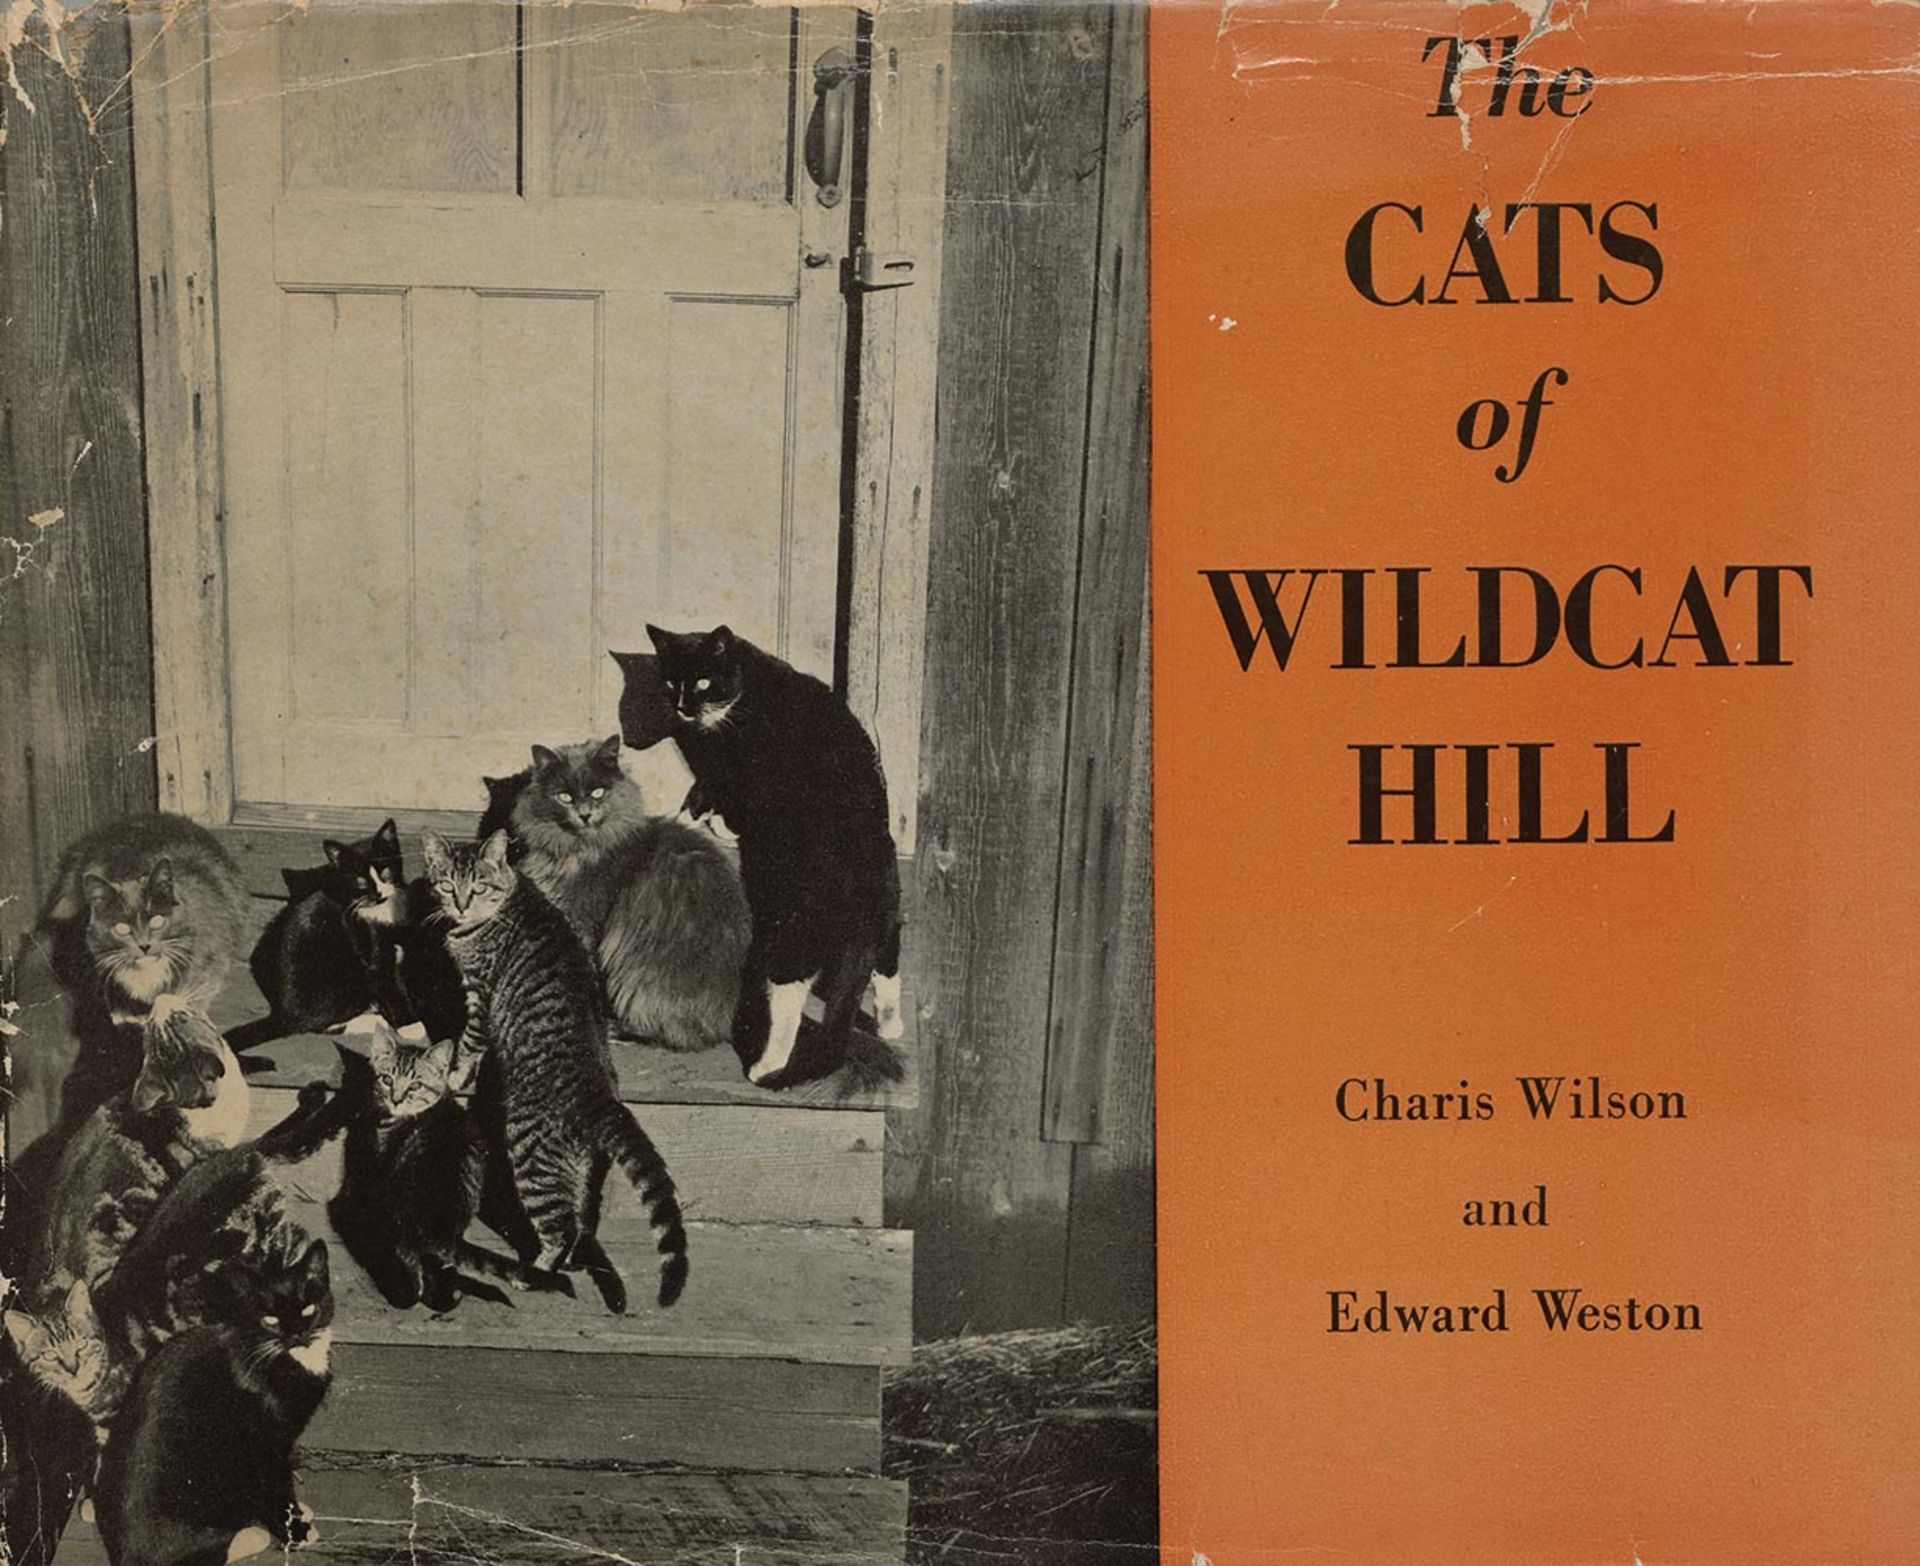 Wilson, Charis und Weston, Edward - Illustr.: The cats of wildcat hill